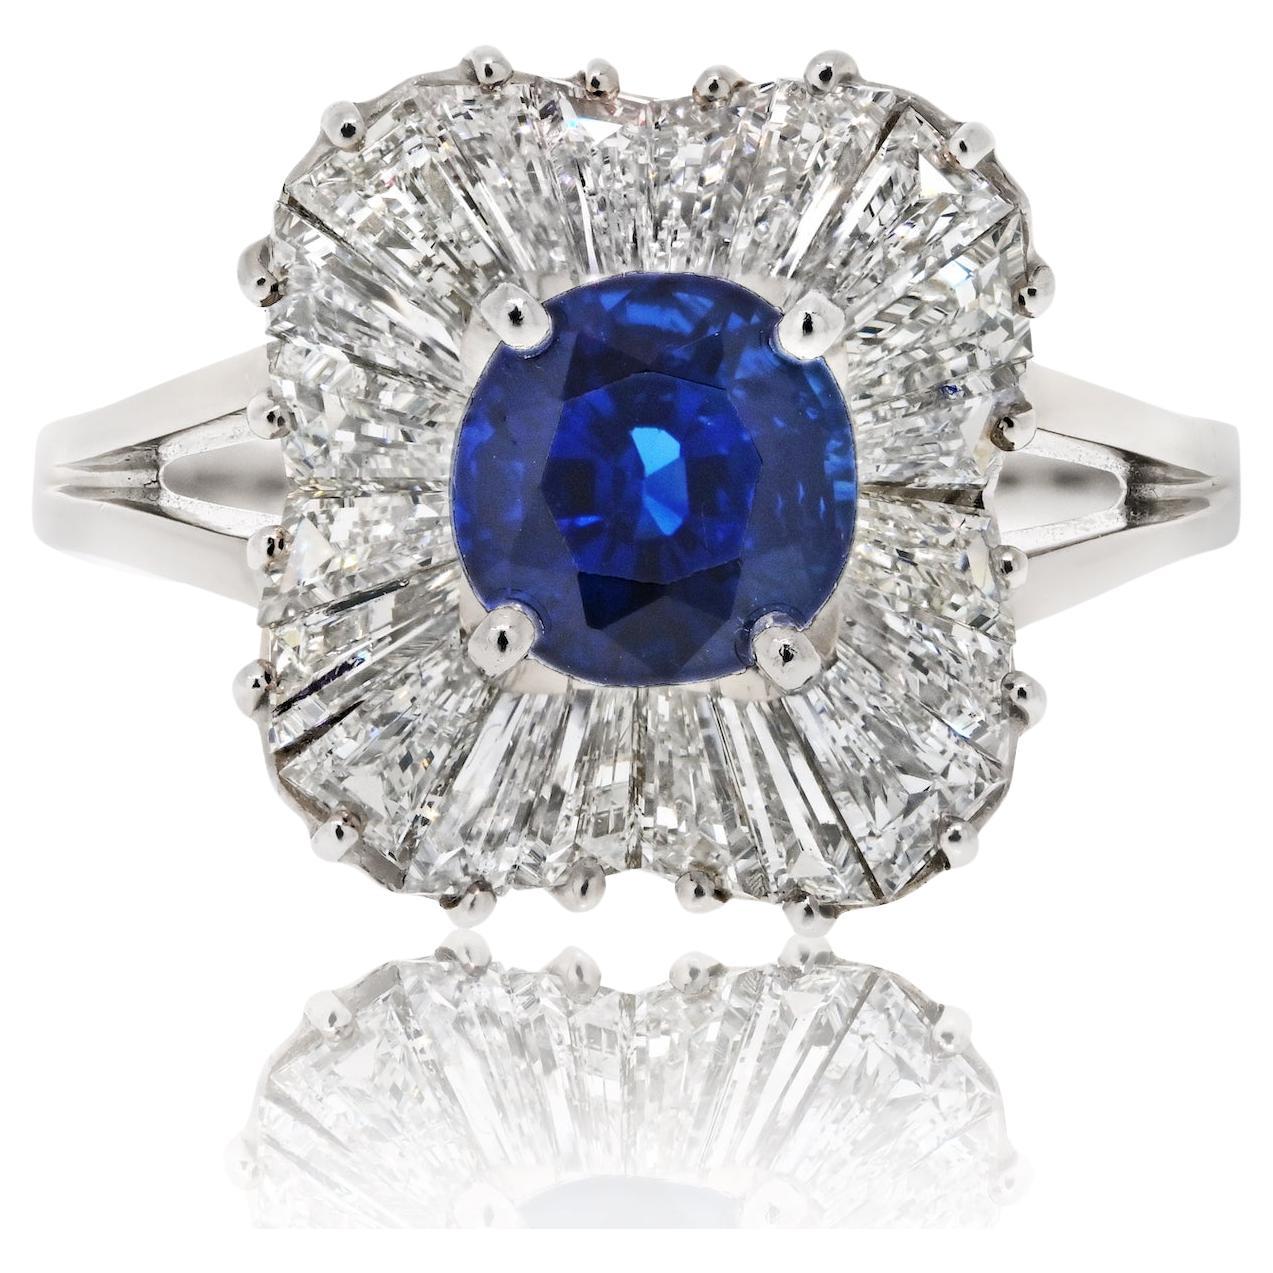 Oscar Heyman Bague ballerine en platine avec saphir bleu 1,99 carat et diamants